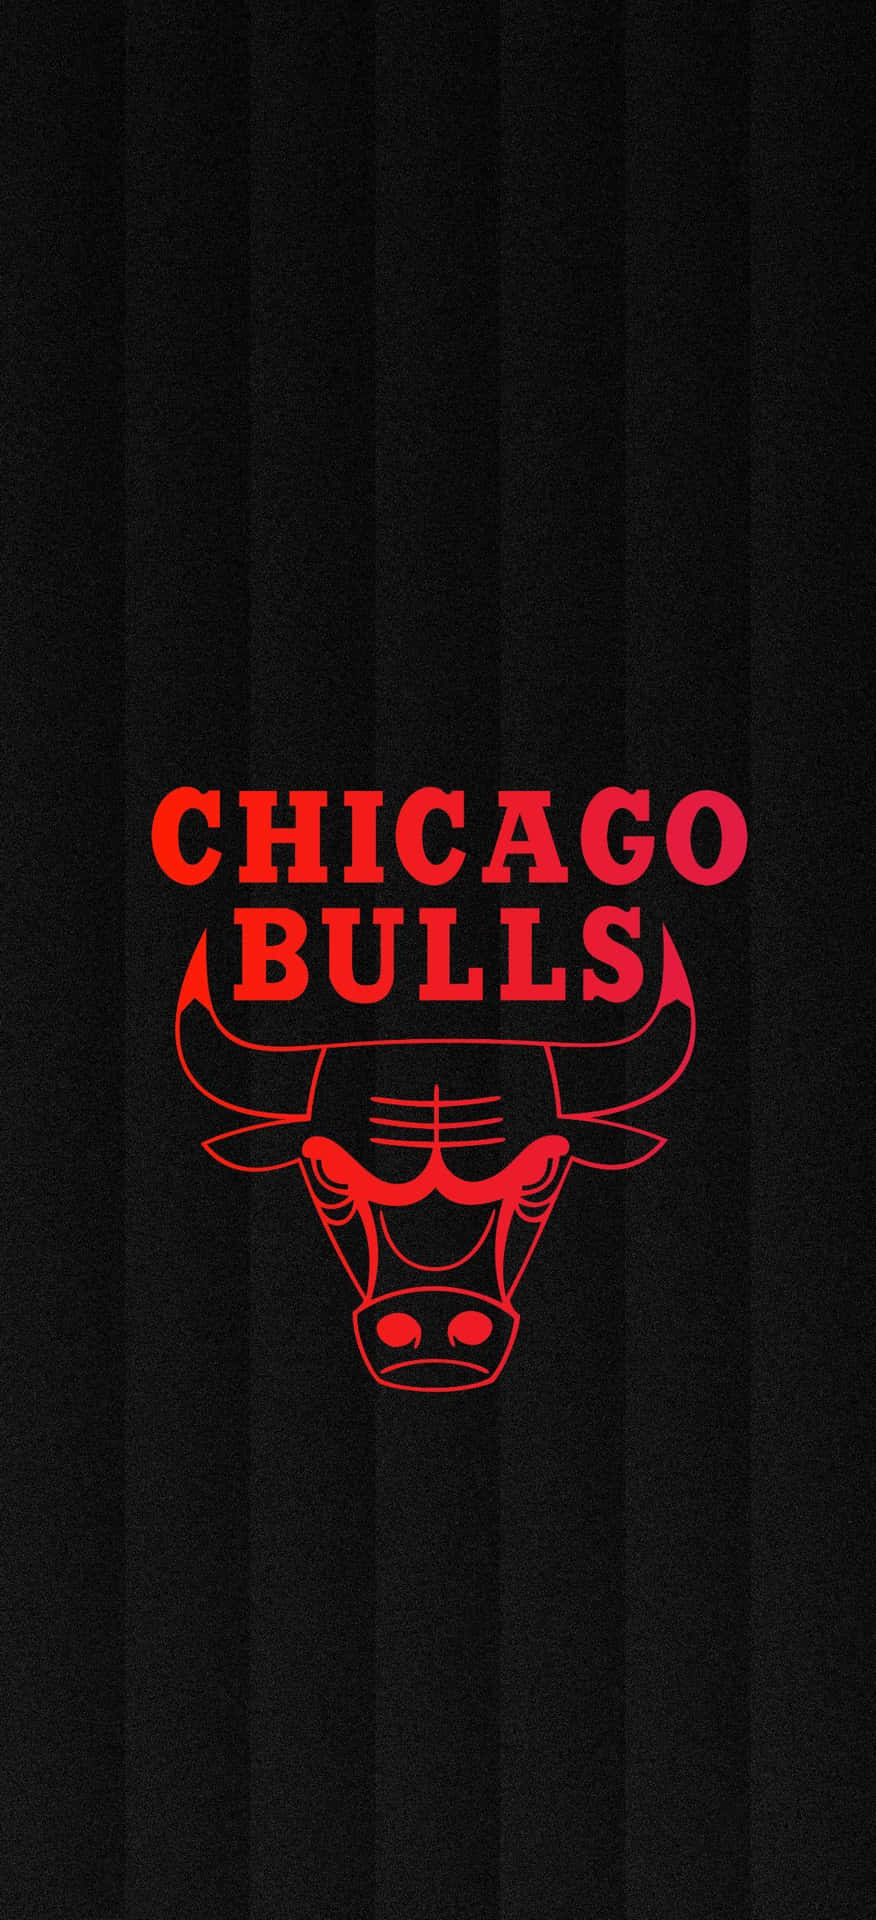 Telefon Chicago Bulls 1140 X 2500 Wallpaper